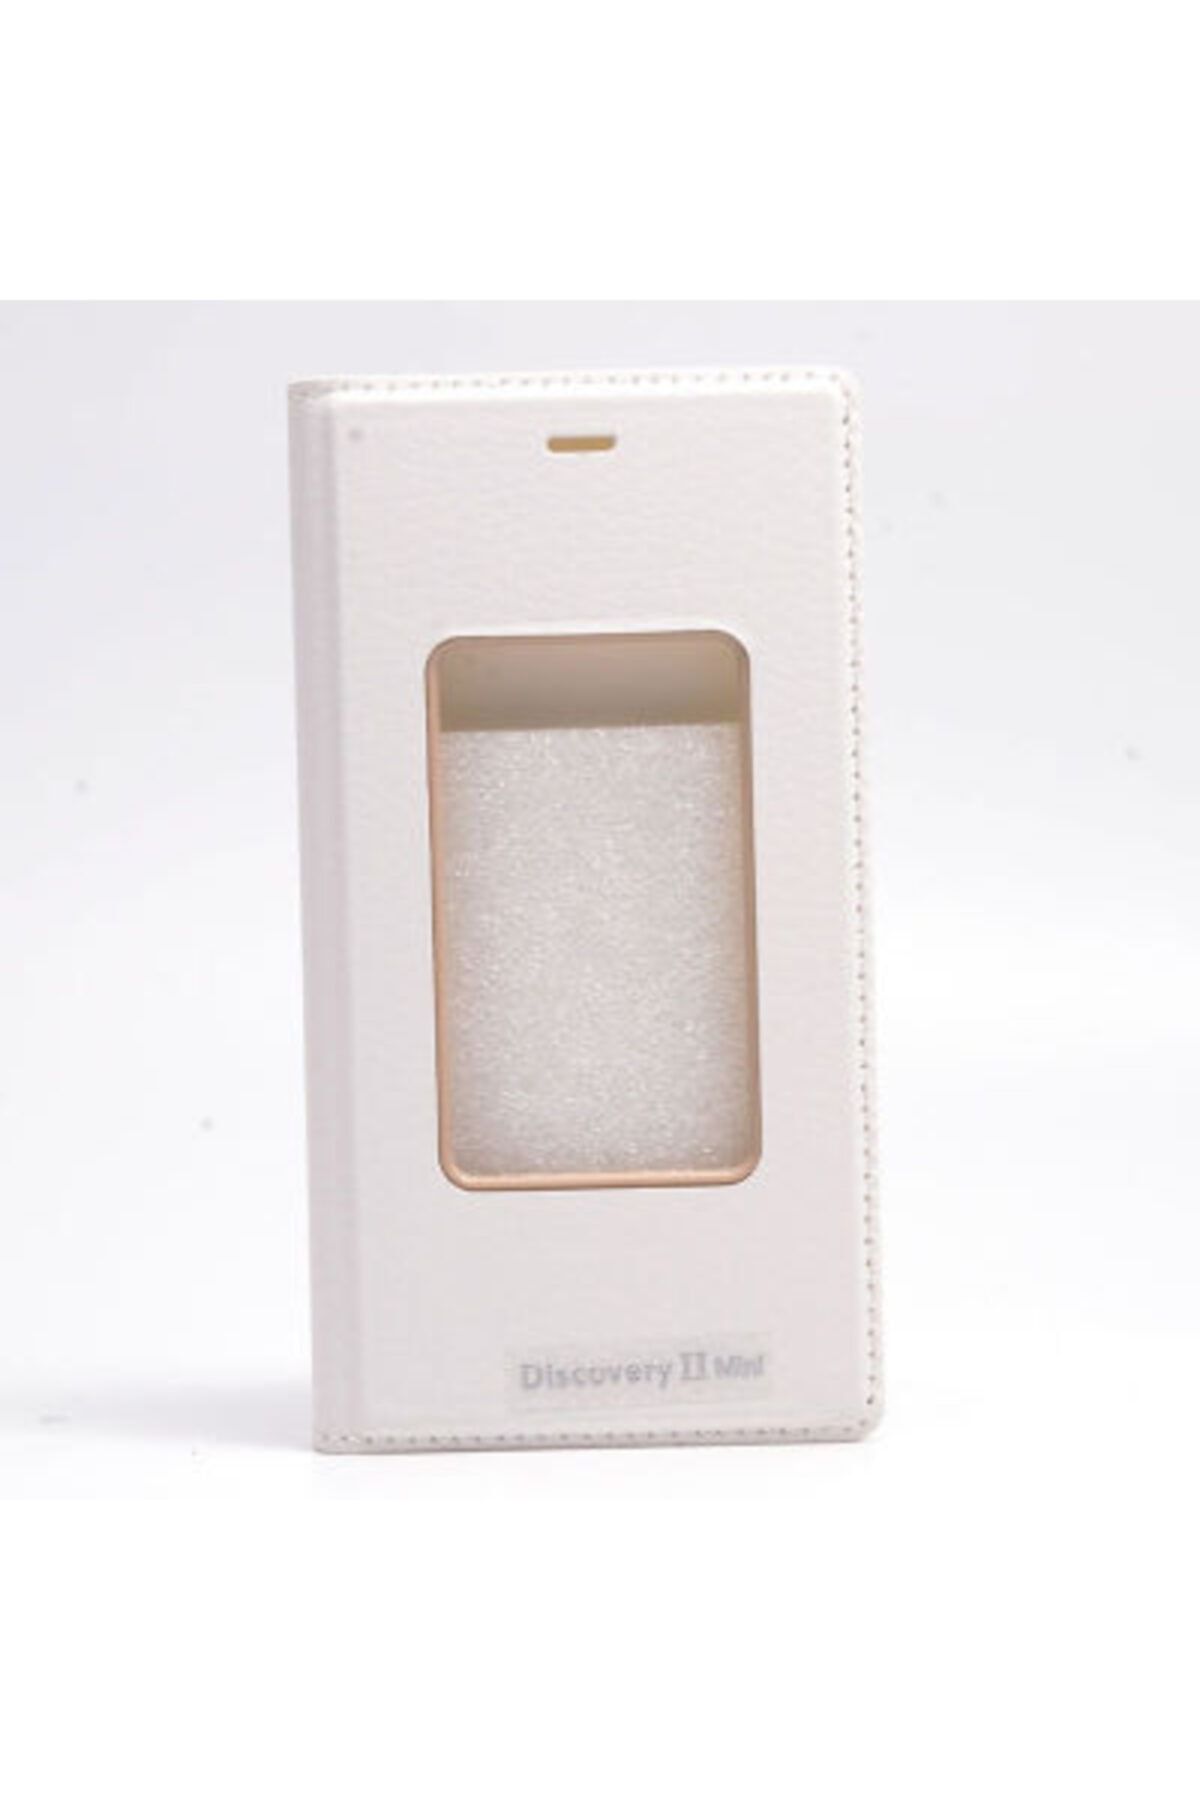 Miscase General Mobile Discovery 2 Mini Kılıf Dolce Case Beyaz Uyumlu